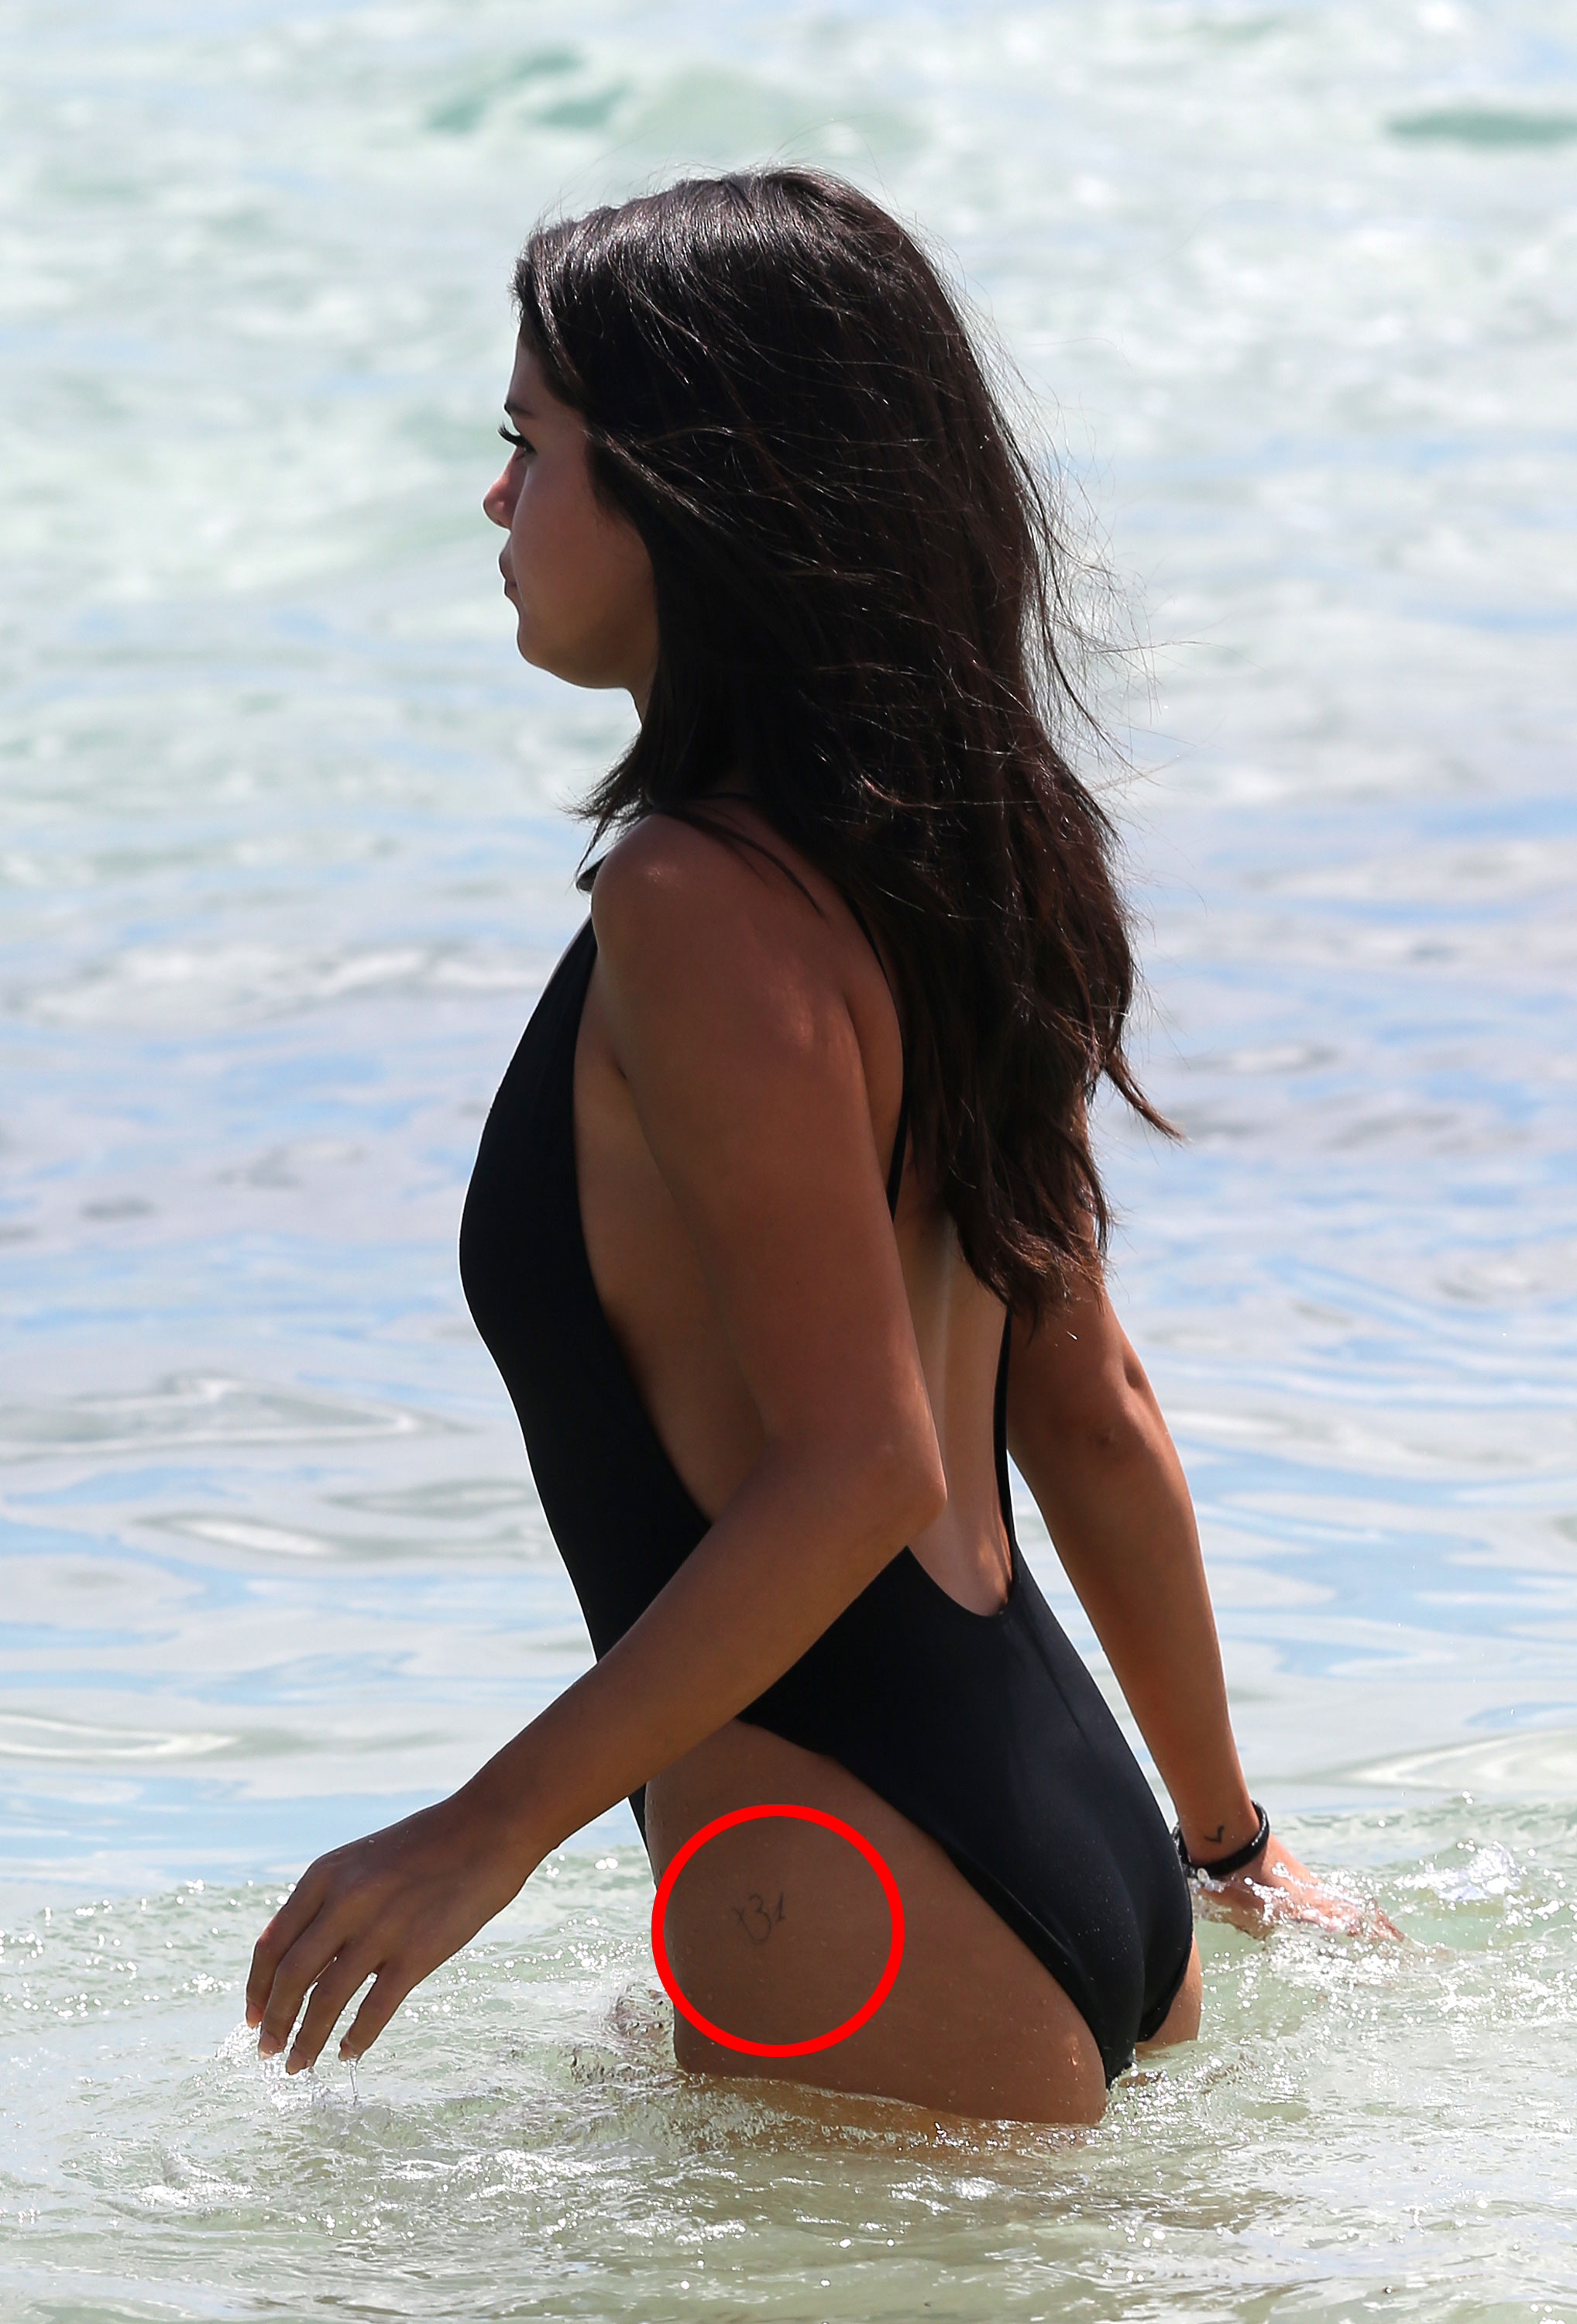 Selena Gomez debuts large upper back tattoo